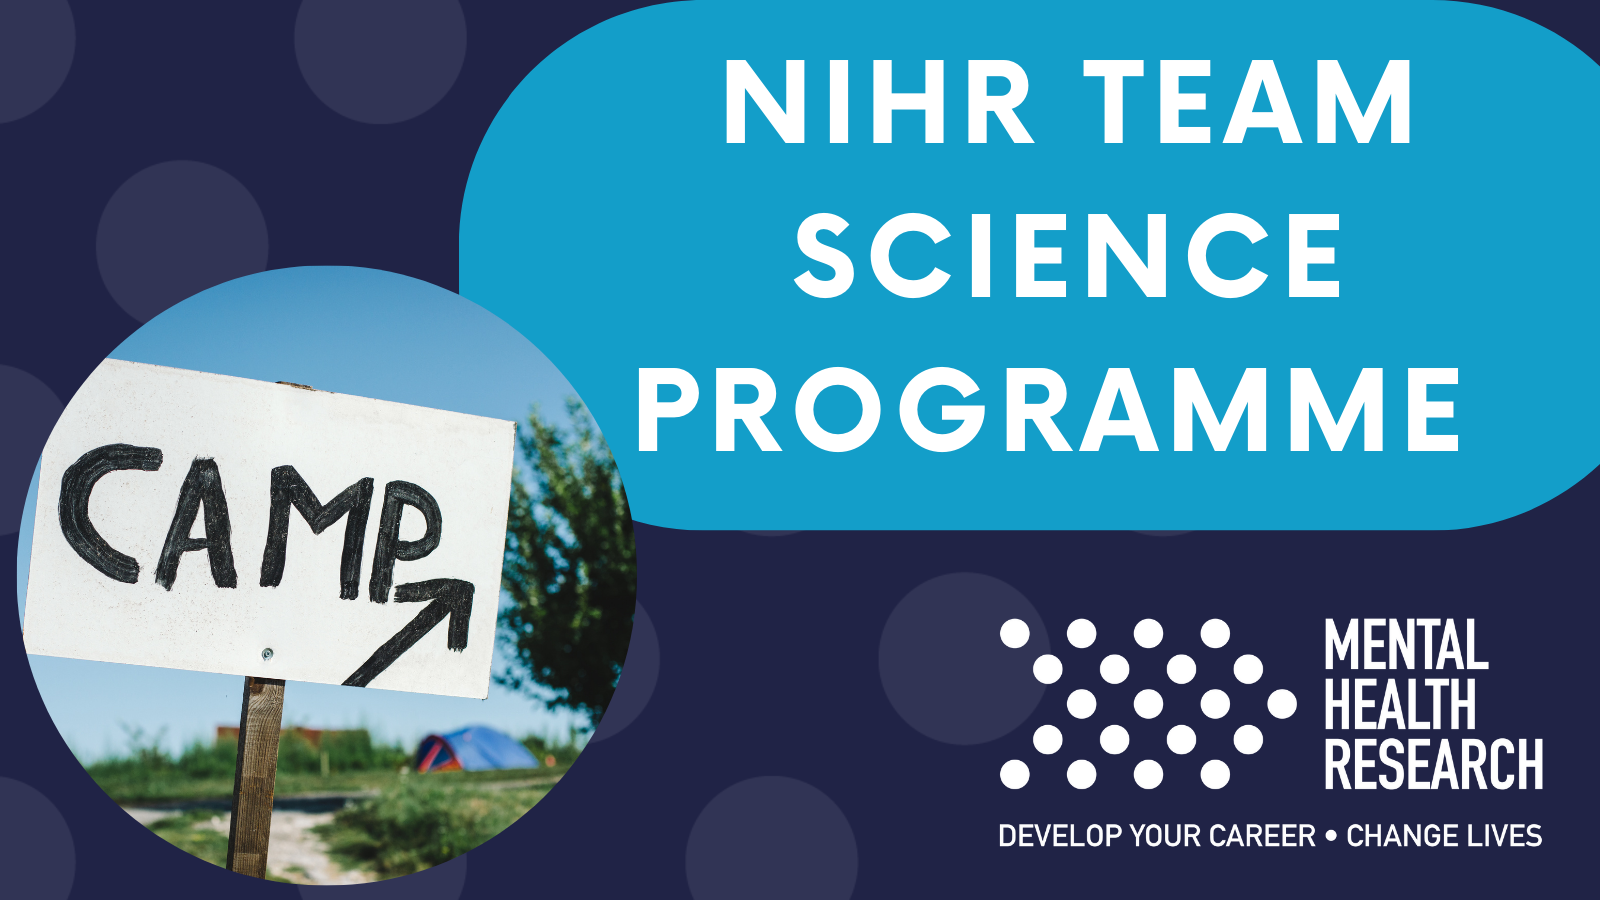 NIHR Team Science Programme